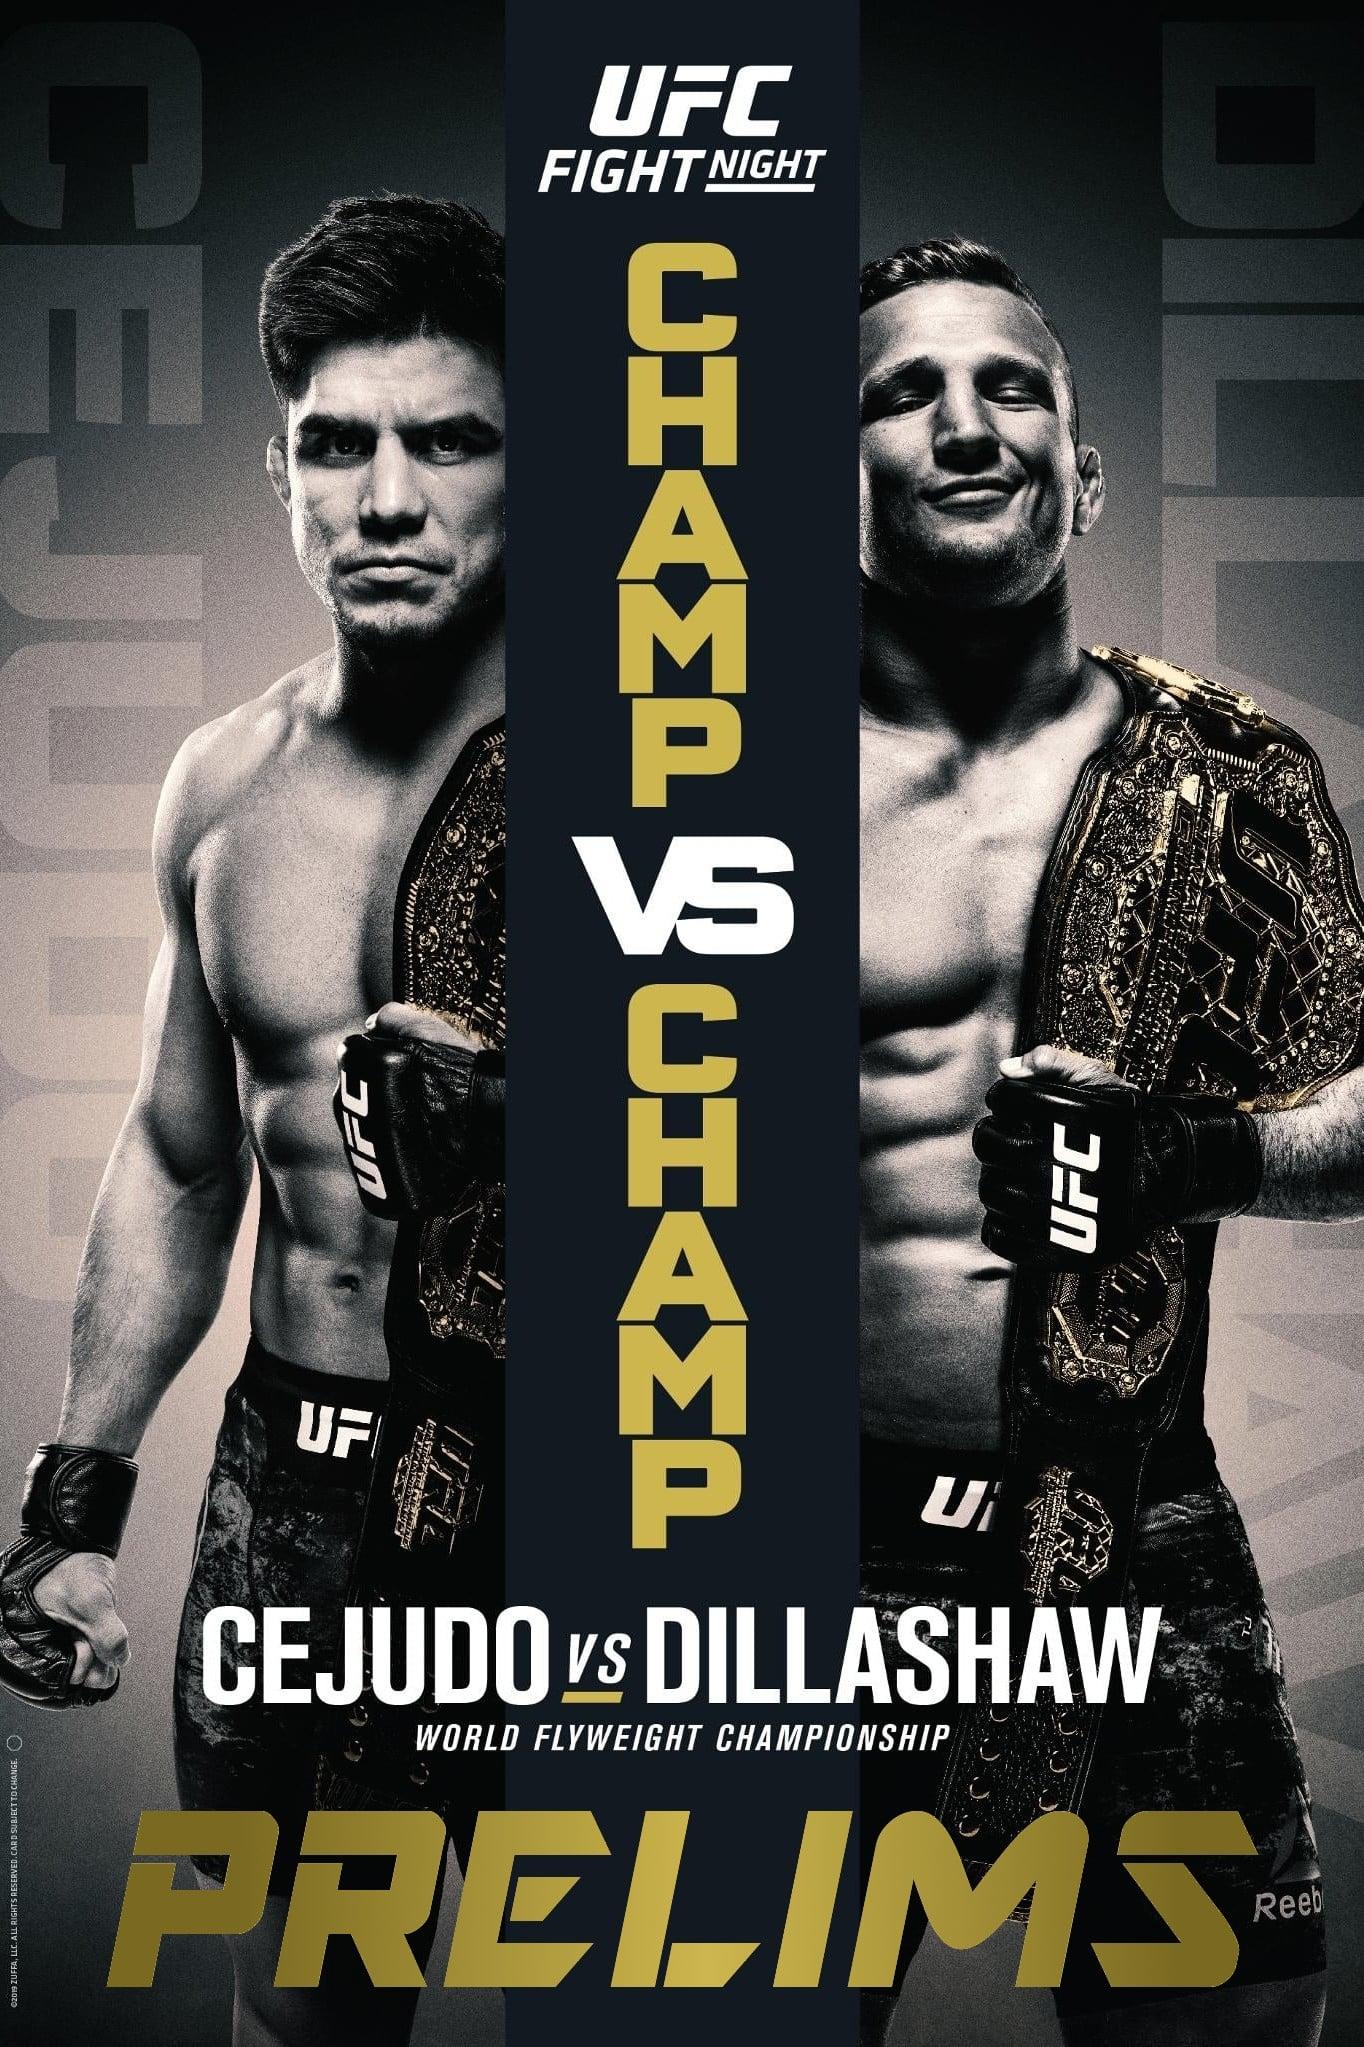 UFC Fight Night 143: Cejudo vs. Dillashaw poster